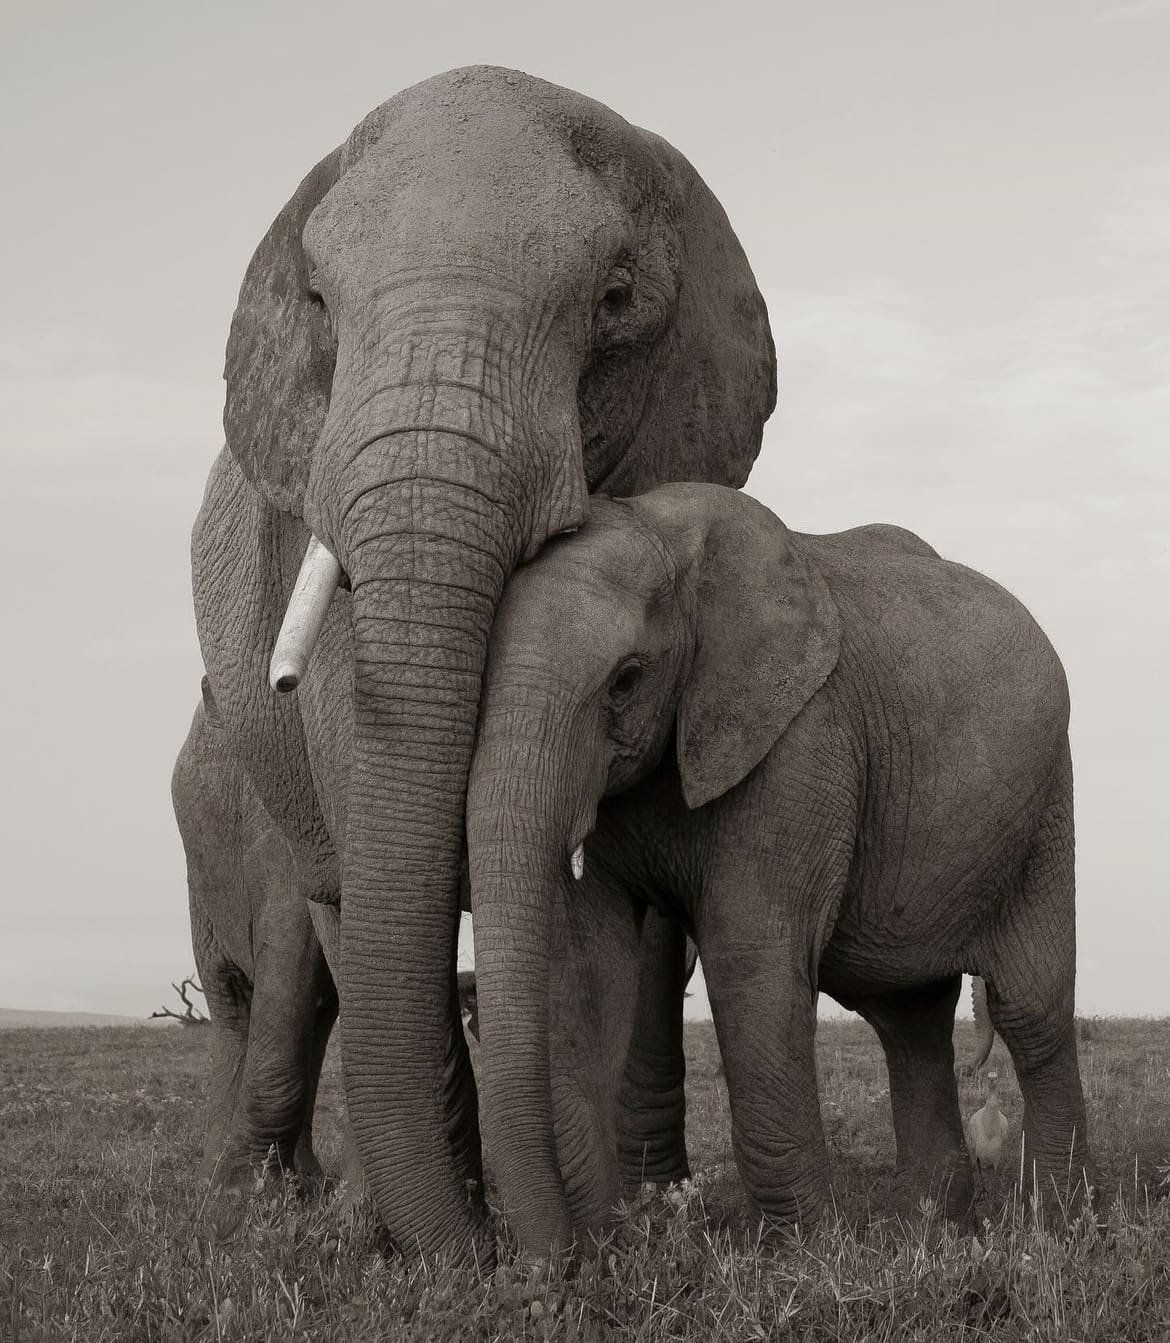 Elephant family in Kenya